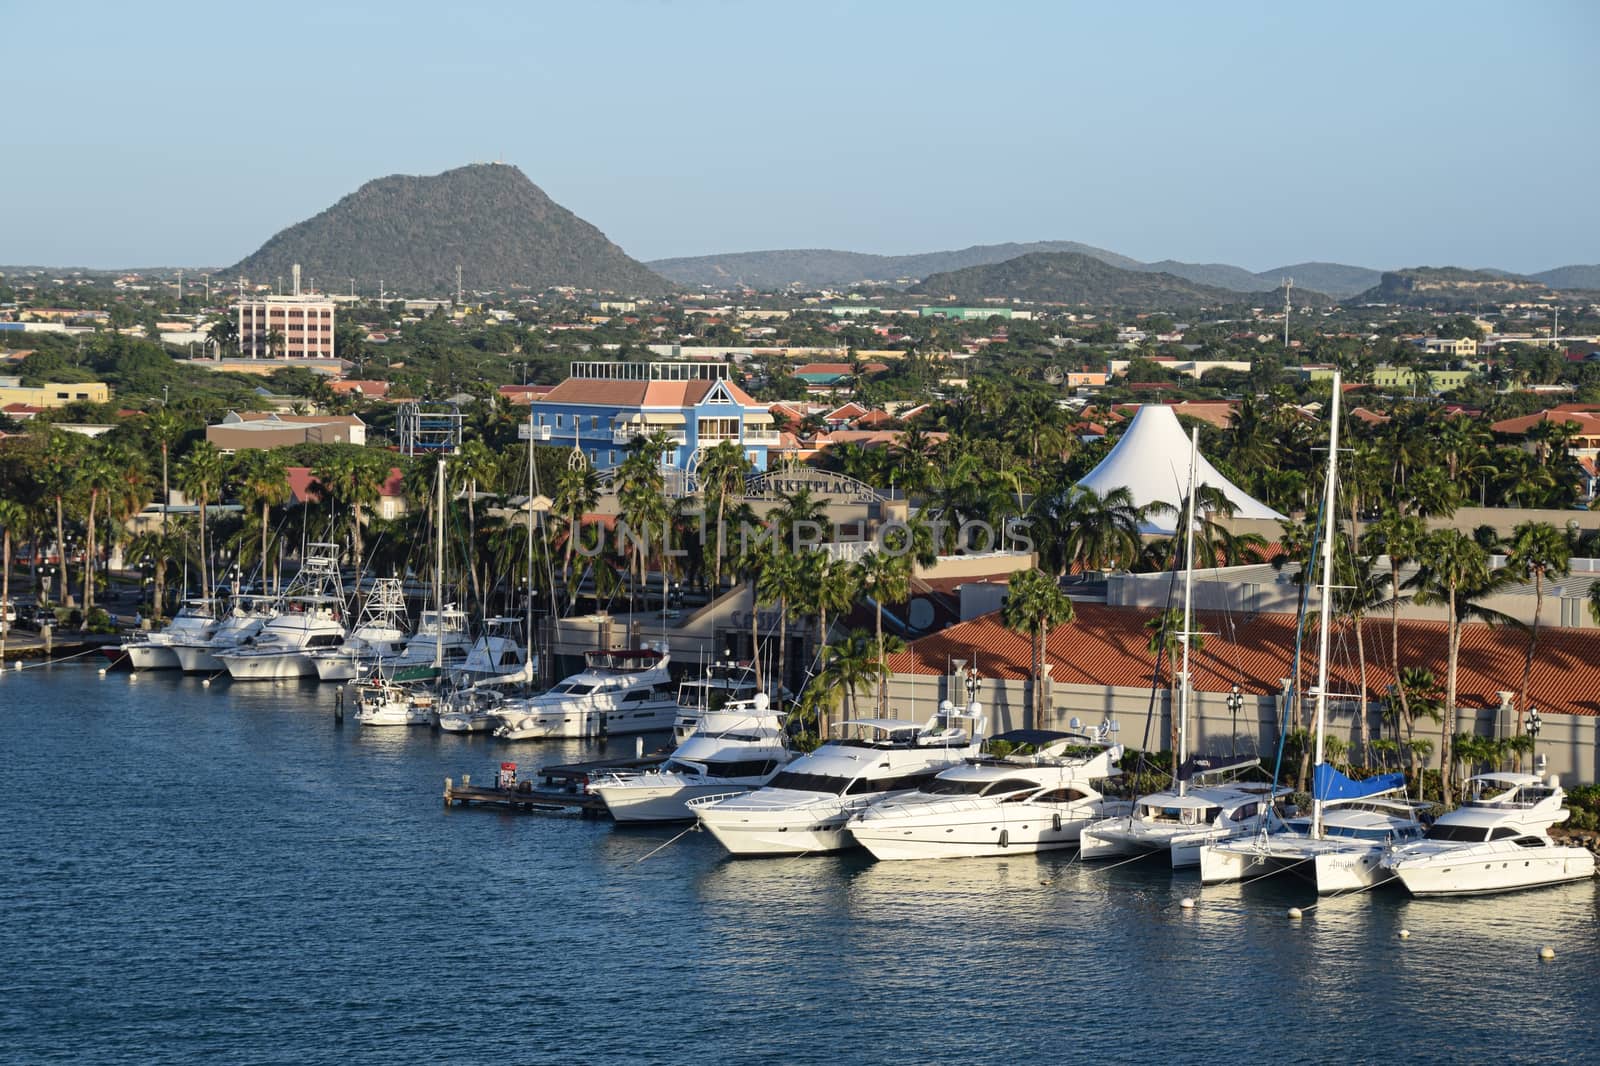 Aruba - December 2014: View inland over the harbour